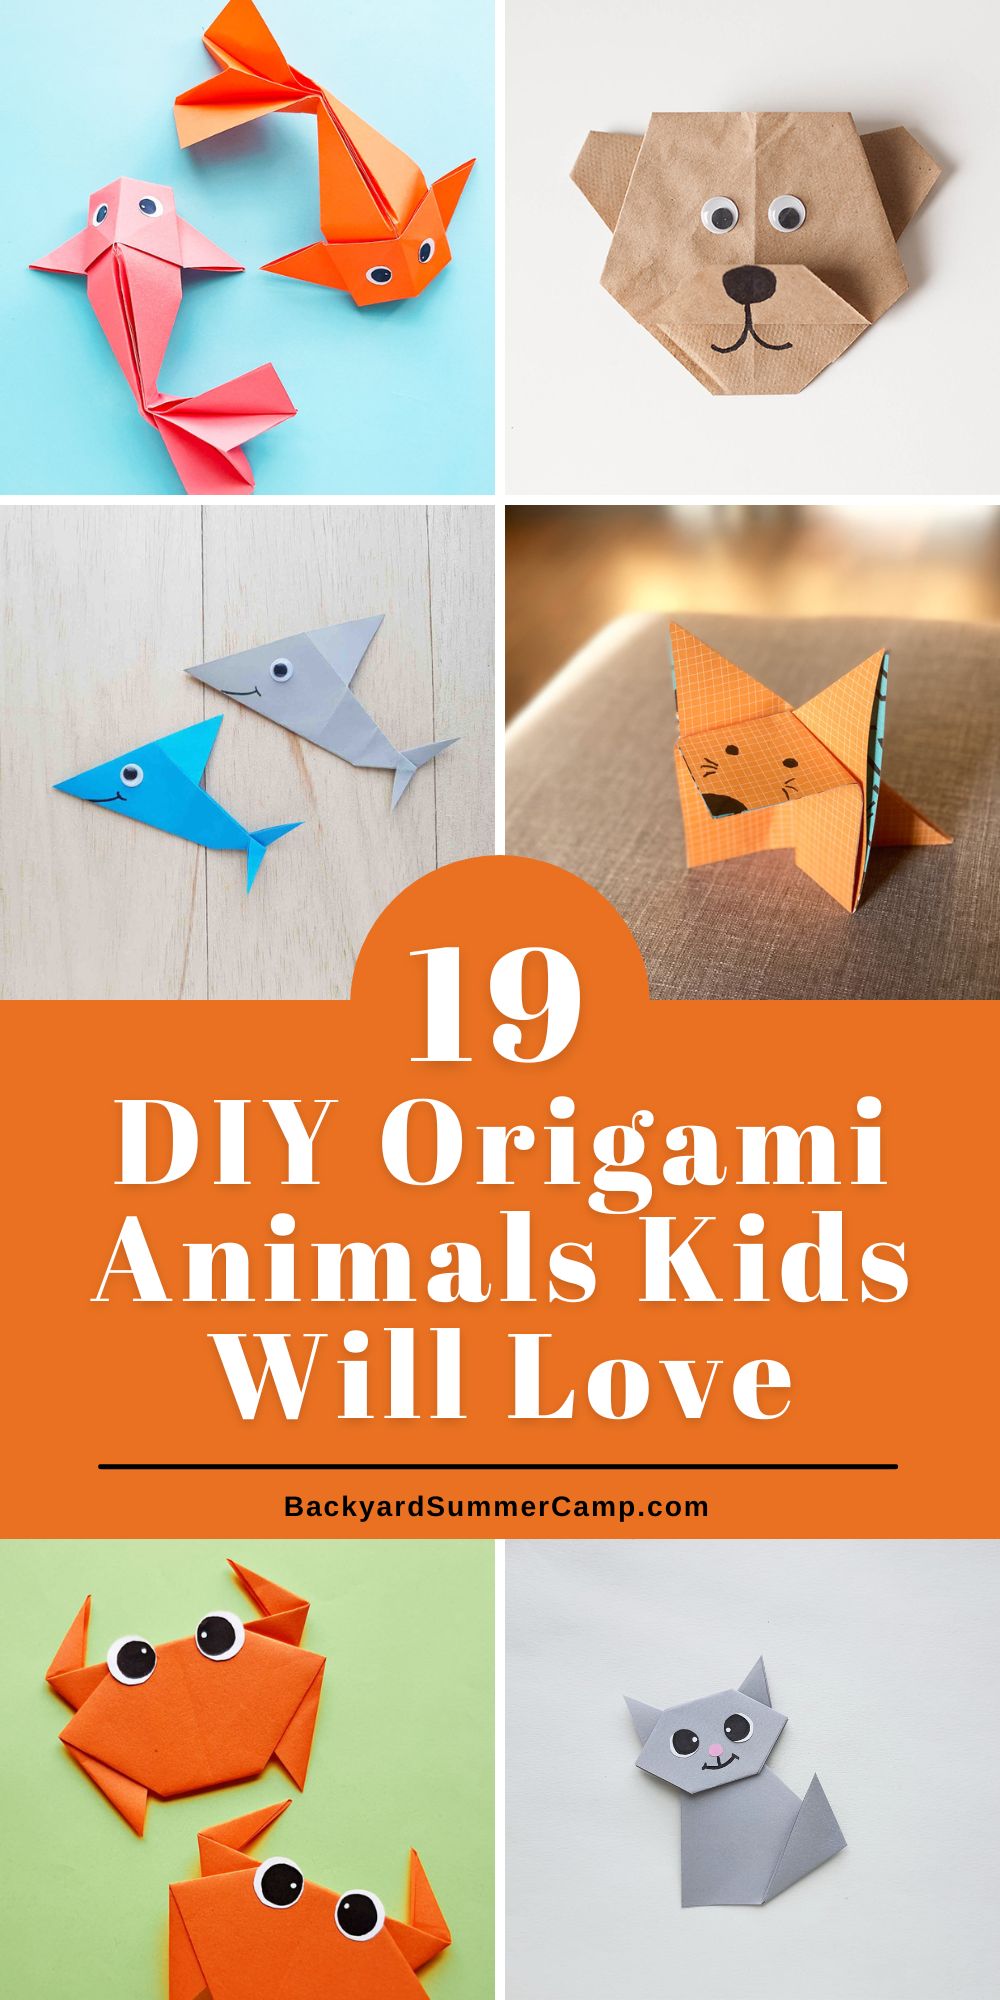 19 DIY Origami Animals Kids Will Love